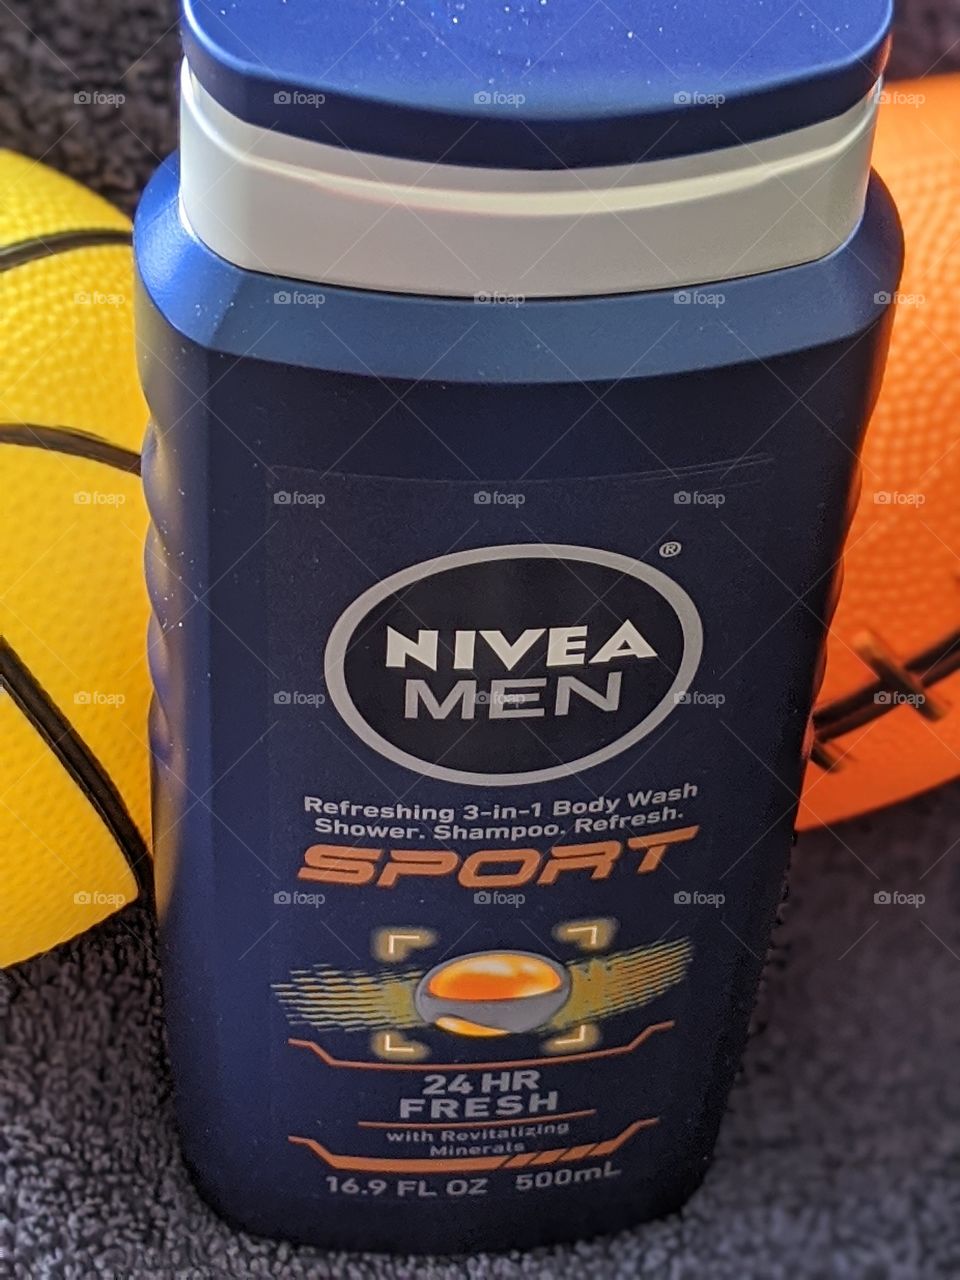 Nivea Men Sport body wash